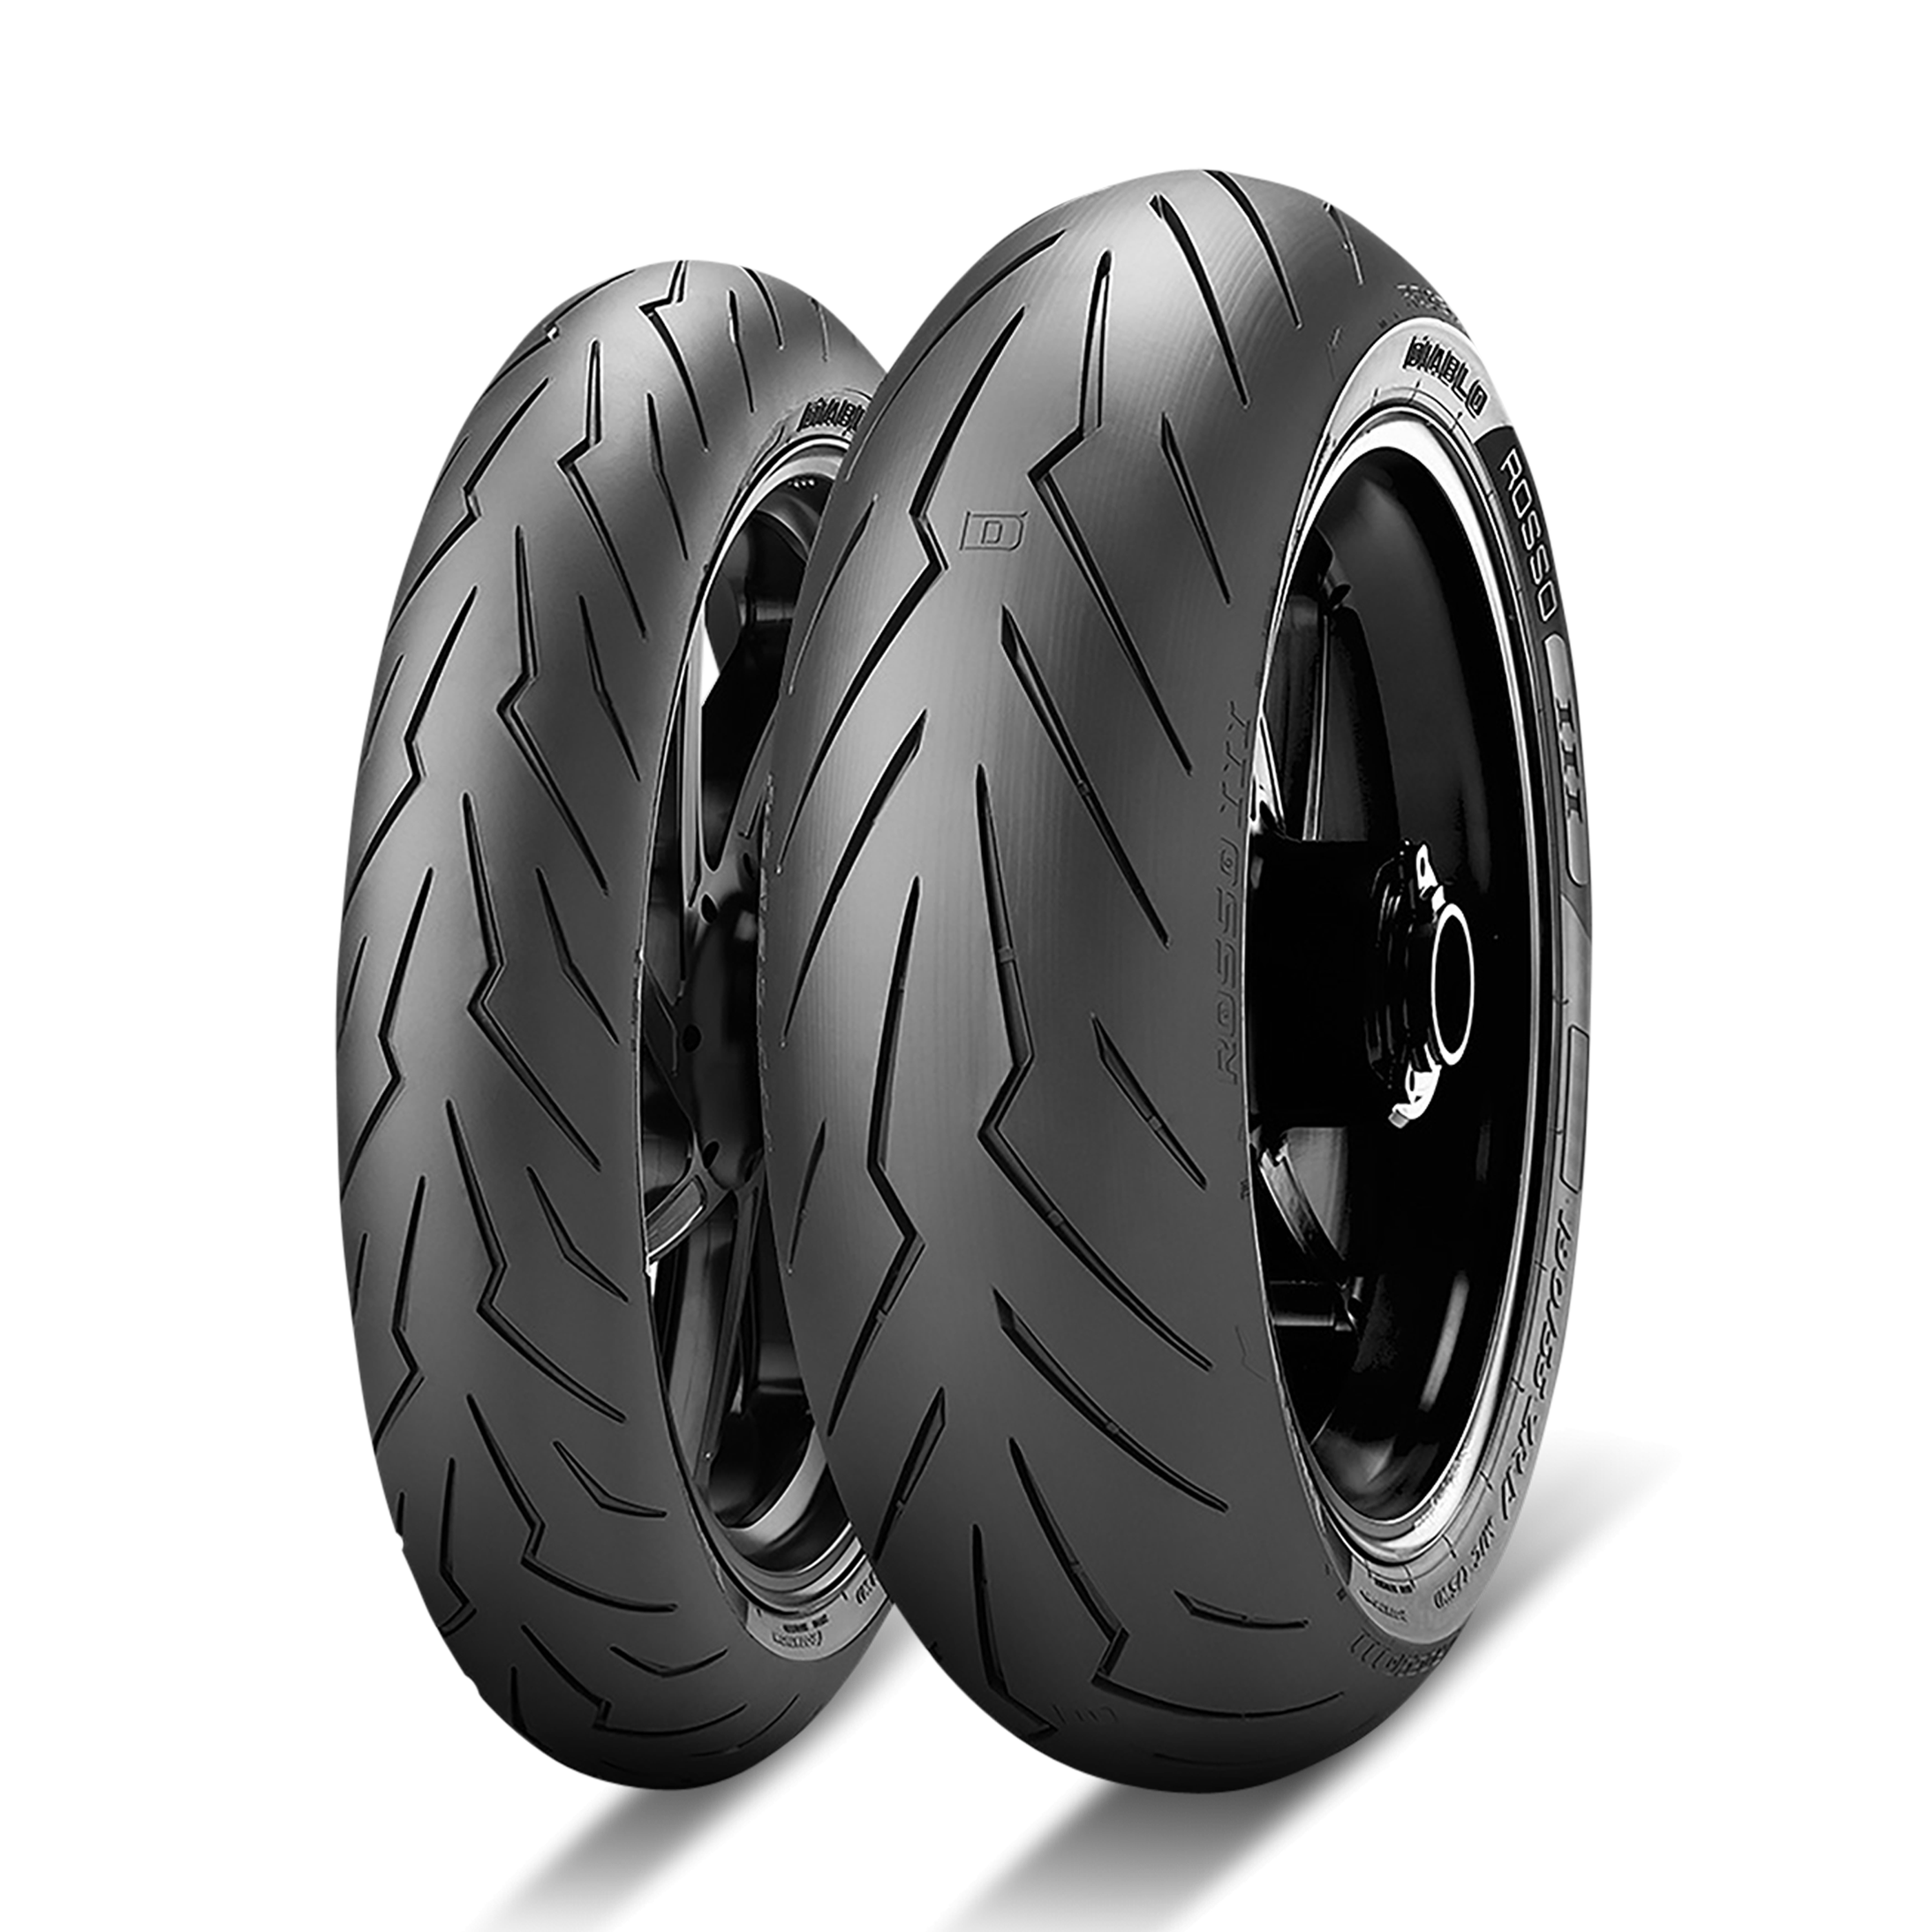 82W Pirelli Diablo Rosso 2 Rear Motorcycle Tire for Ducati XDiavel 2016-2018 240/45ZR-17 